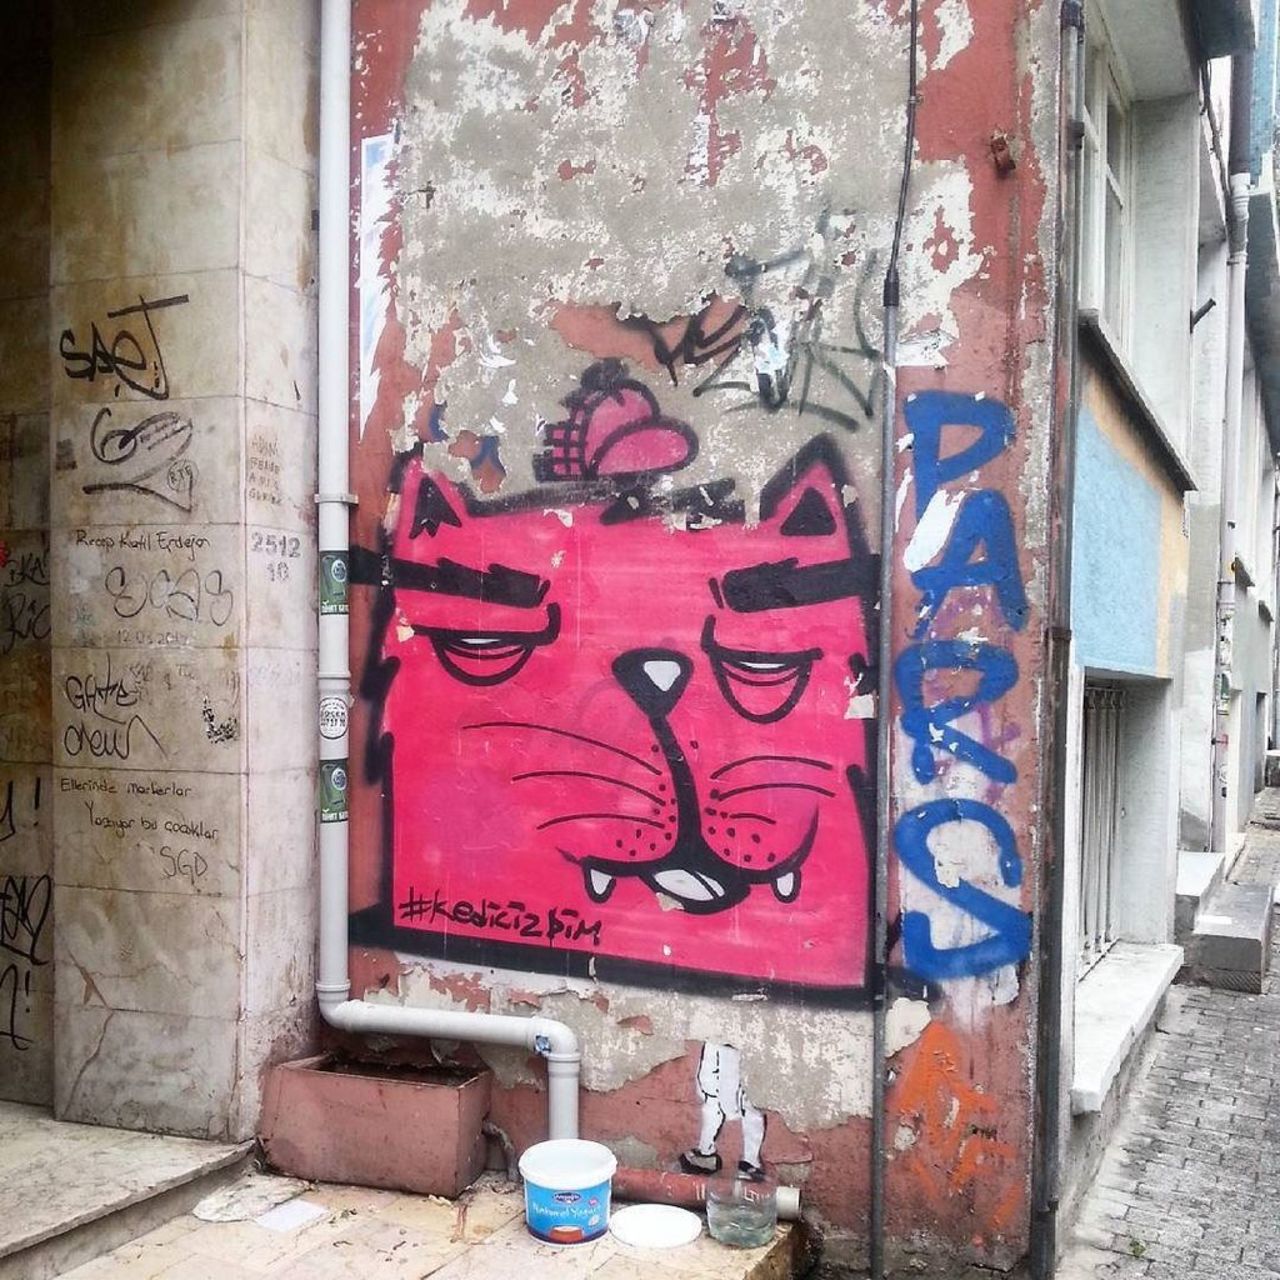 #streetartkadikoy #streetart #graffiti #publicart #urbanart #sokaksanatı #streetartistanbul #istanbulstreetart #gra… https://t.co/SJEGnTBOfI